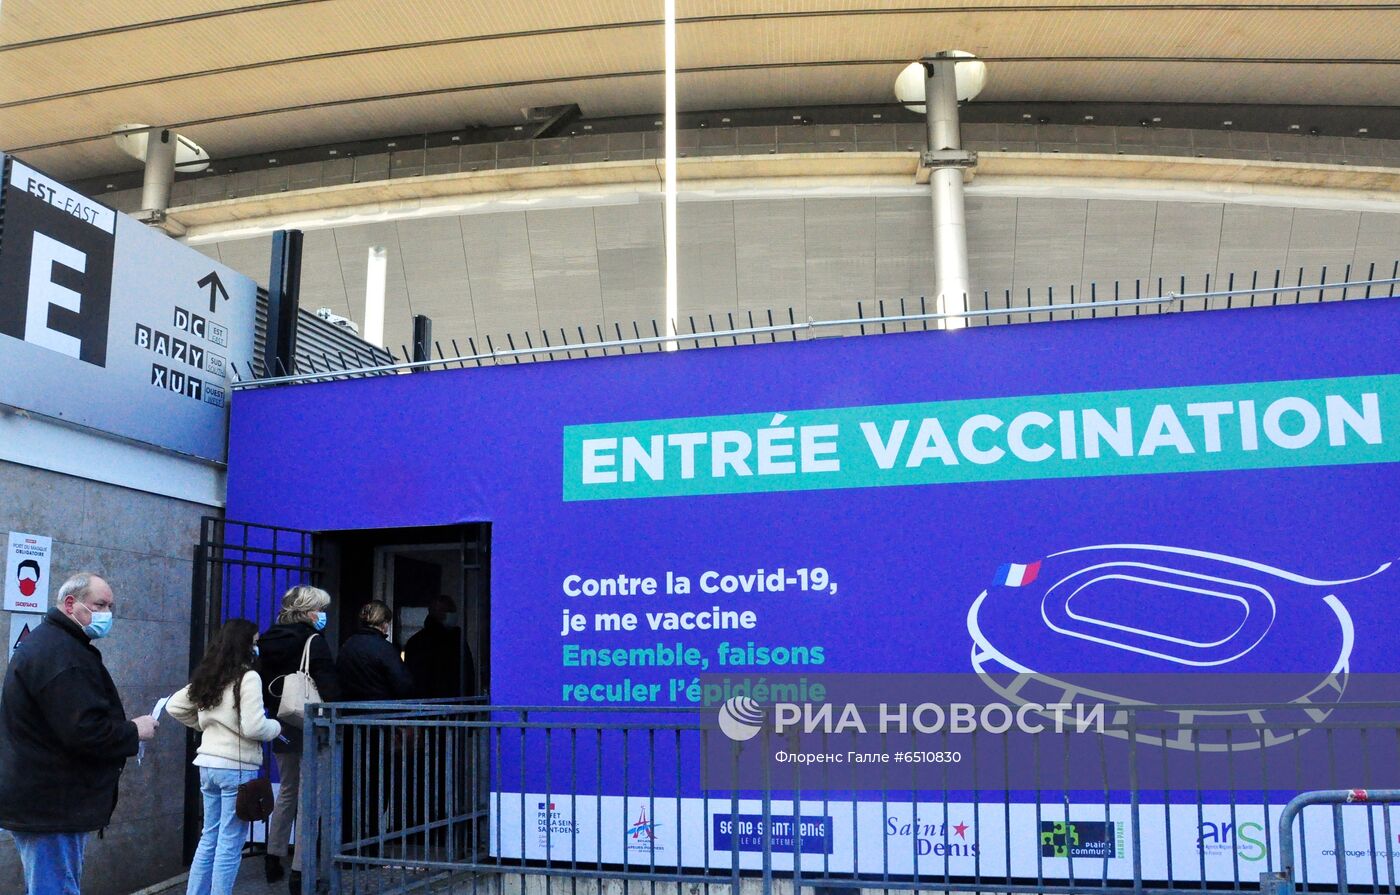 Открытие "вакцинодрома" на стадионе Стад де Франс